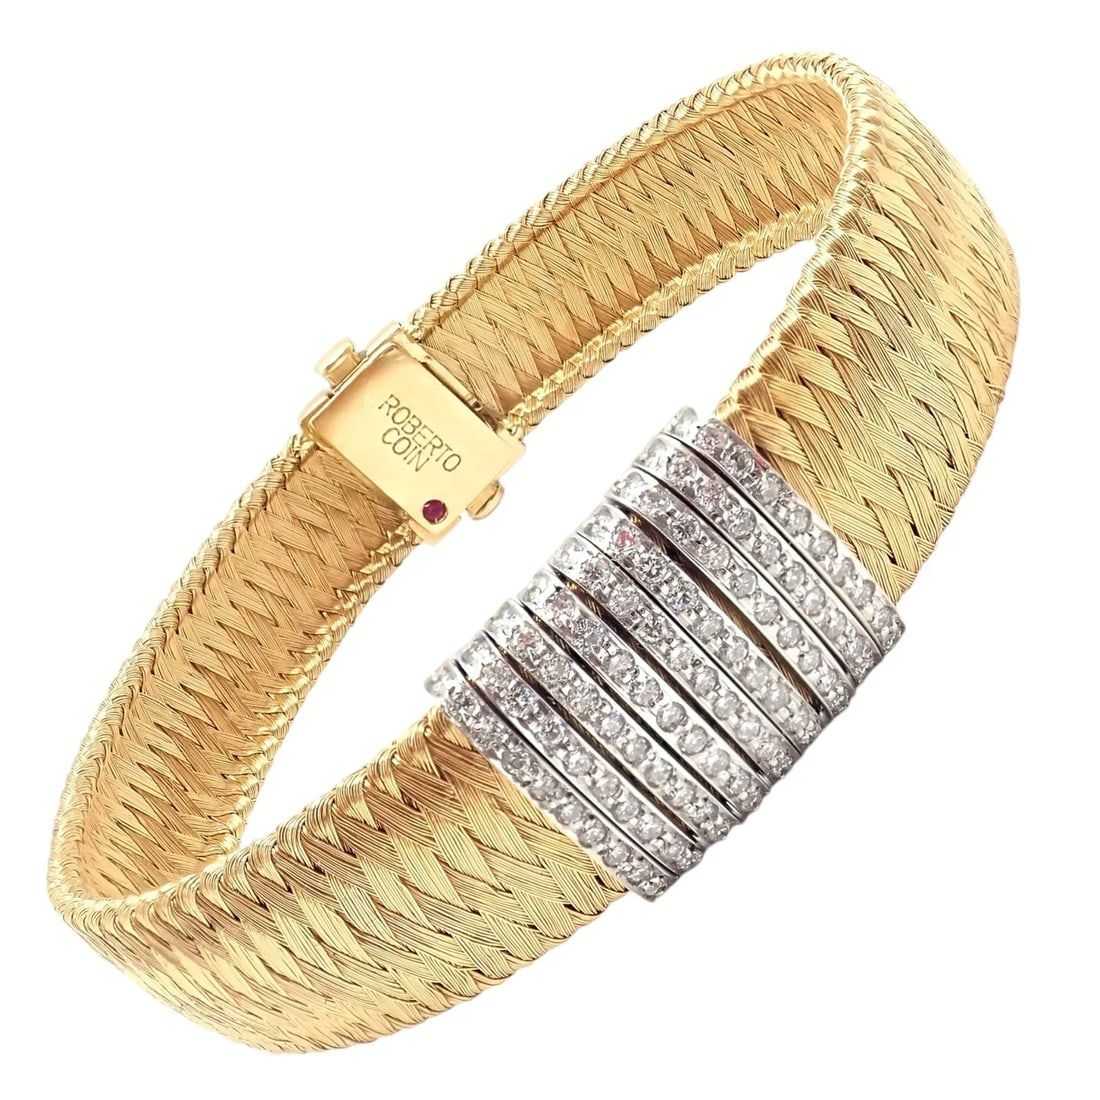 Roberto Coin 18K gold and diamond silk weave bracelet, estimated at $8,000-$10,000 at Jasper52.